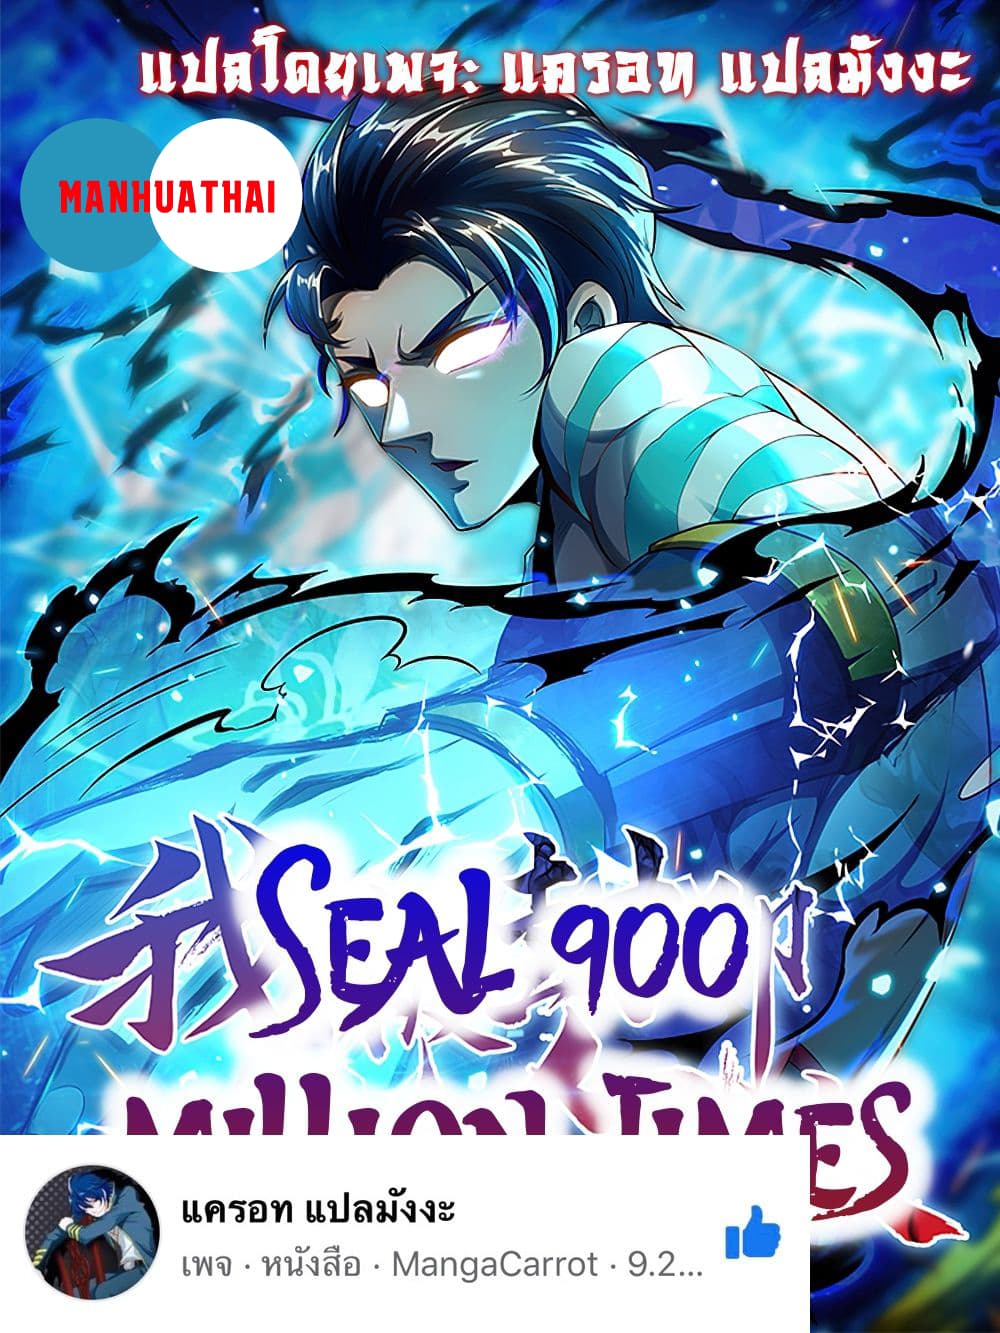 Seal 900 Million Times 21 (1)